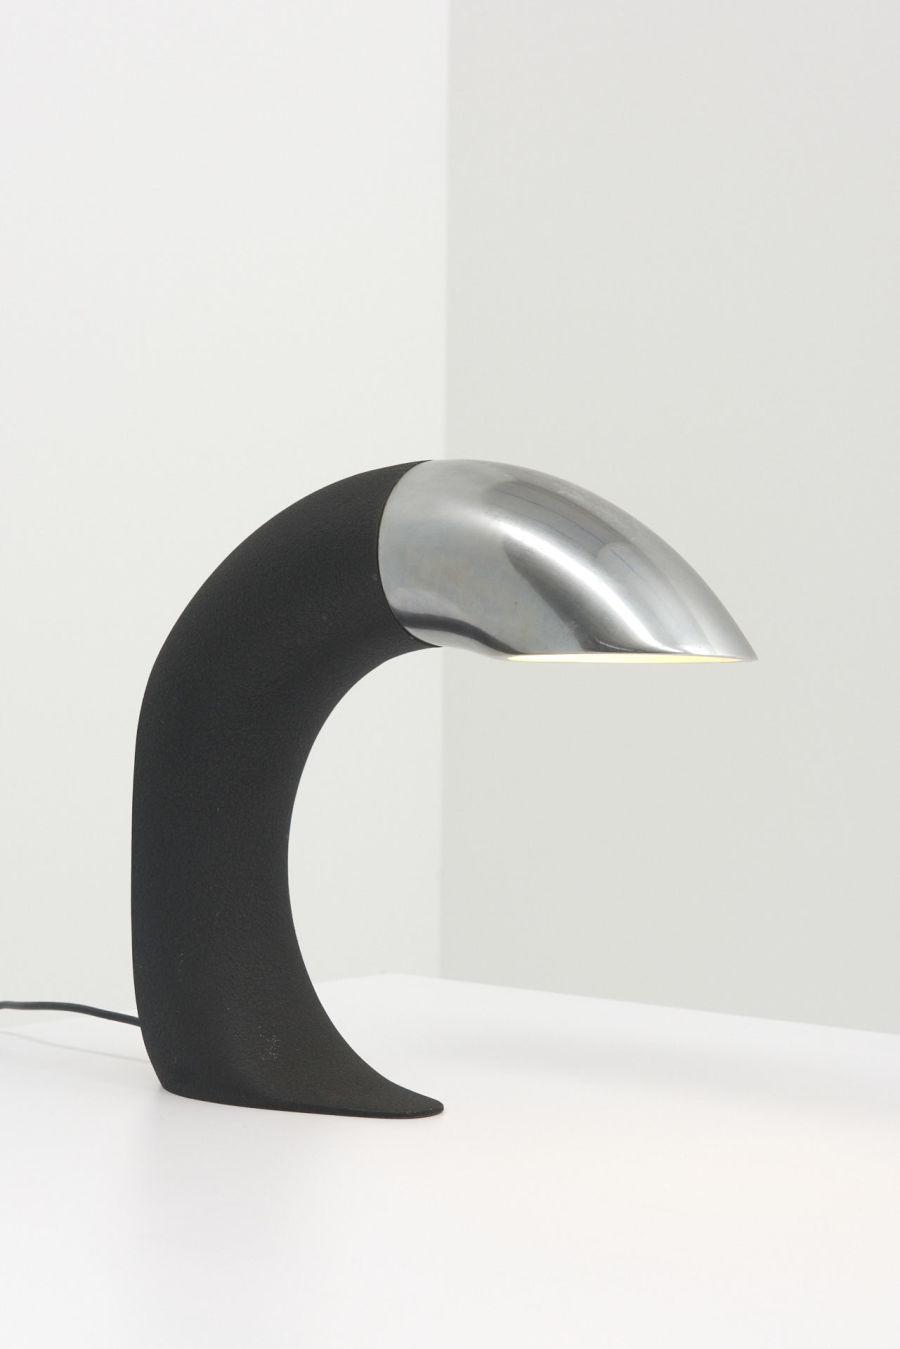 modestfurniture-vintage-2844-table-lamp-black-stainless-steel01